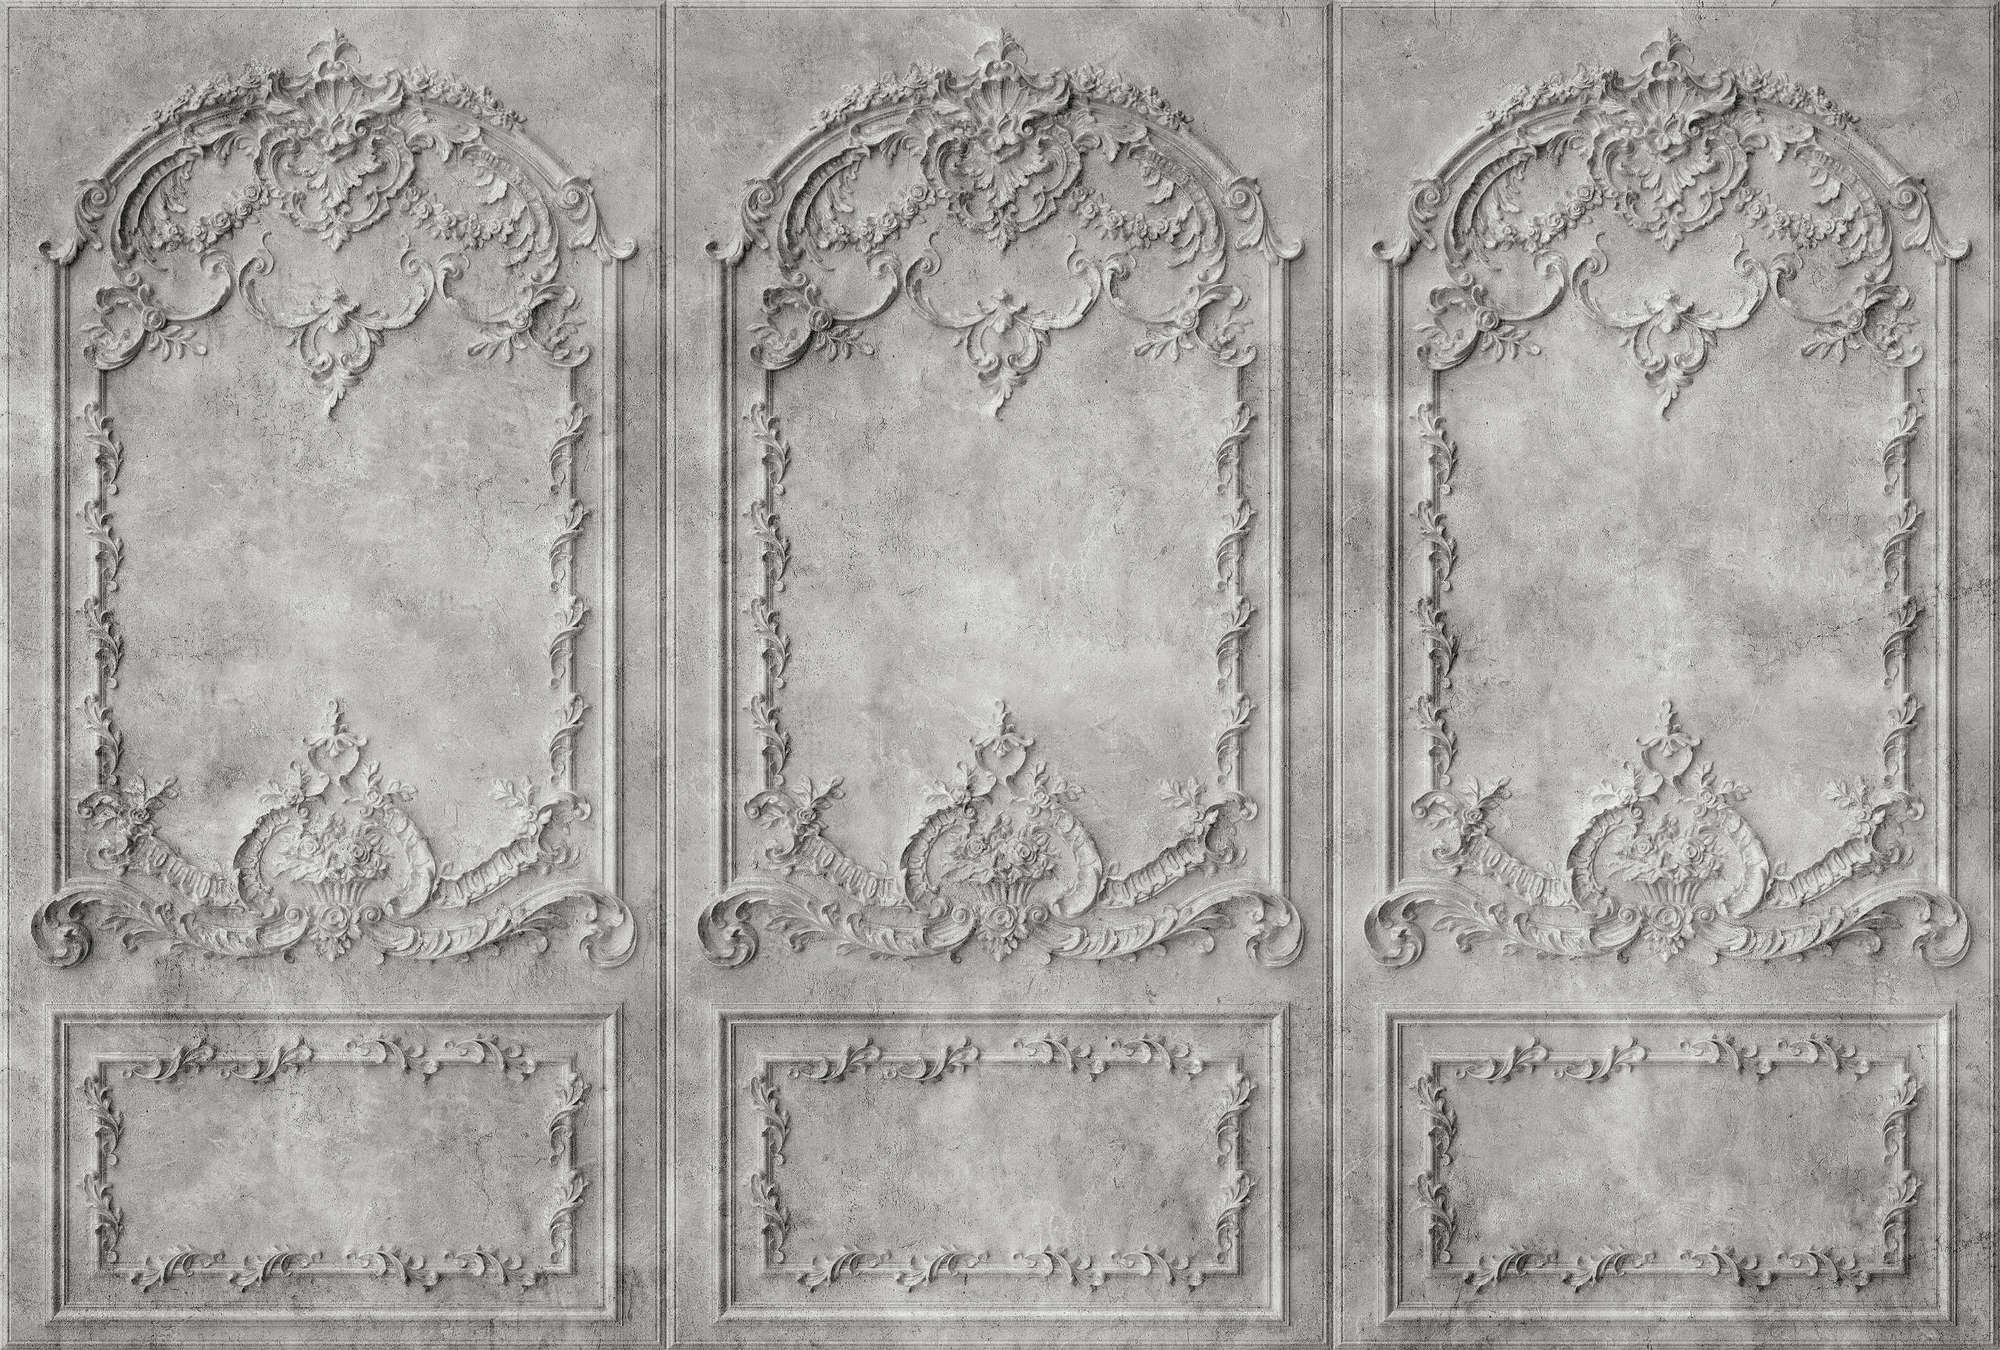             Versailles 2 - Photo wallpaper wood panels grey in baroque style
        